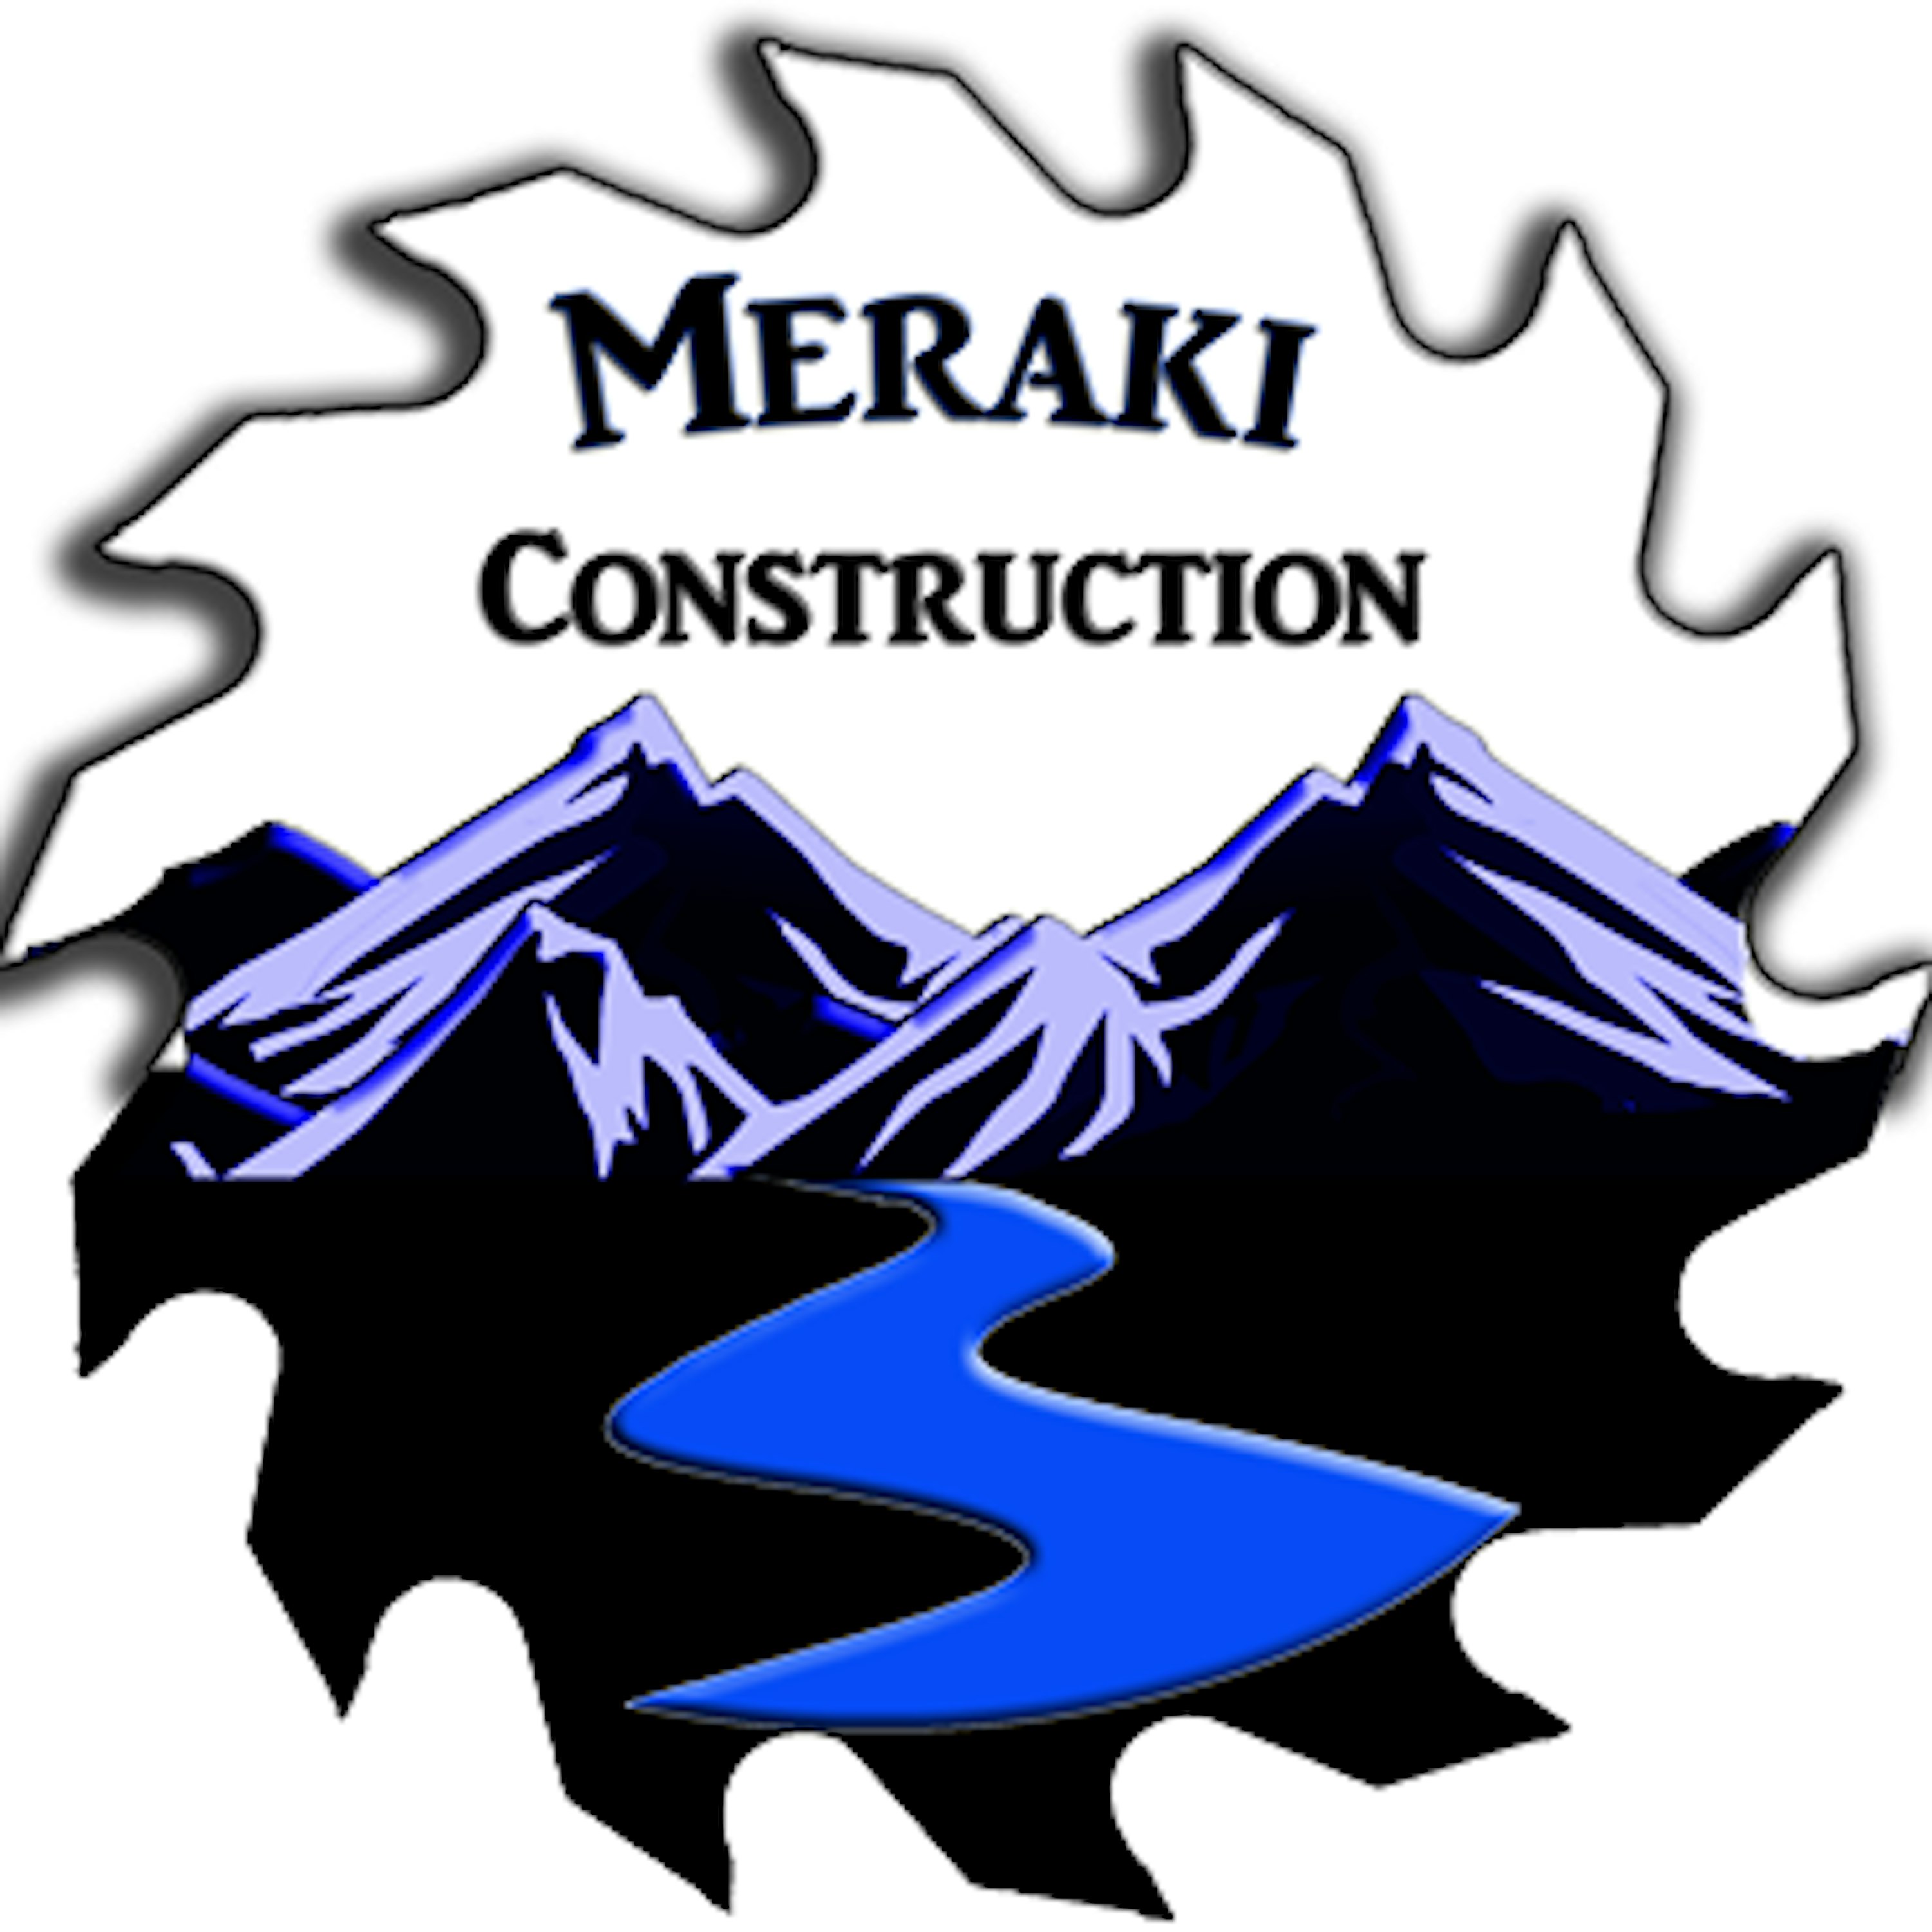 Meraki Construction